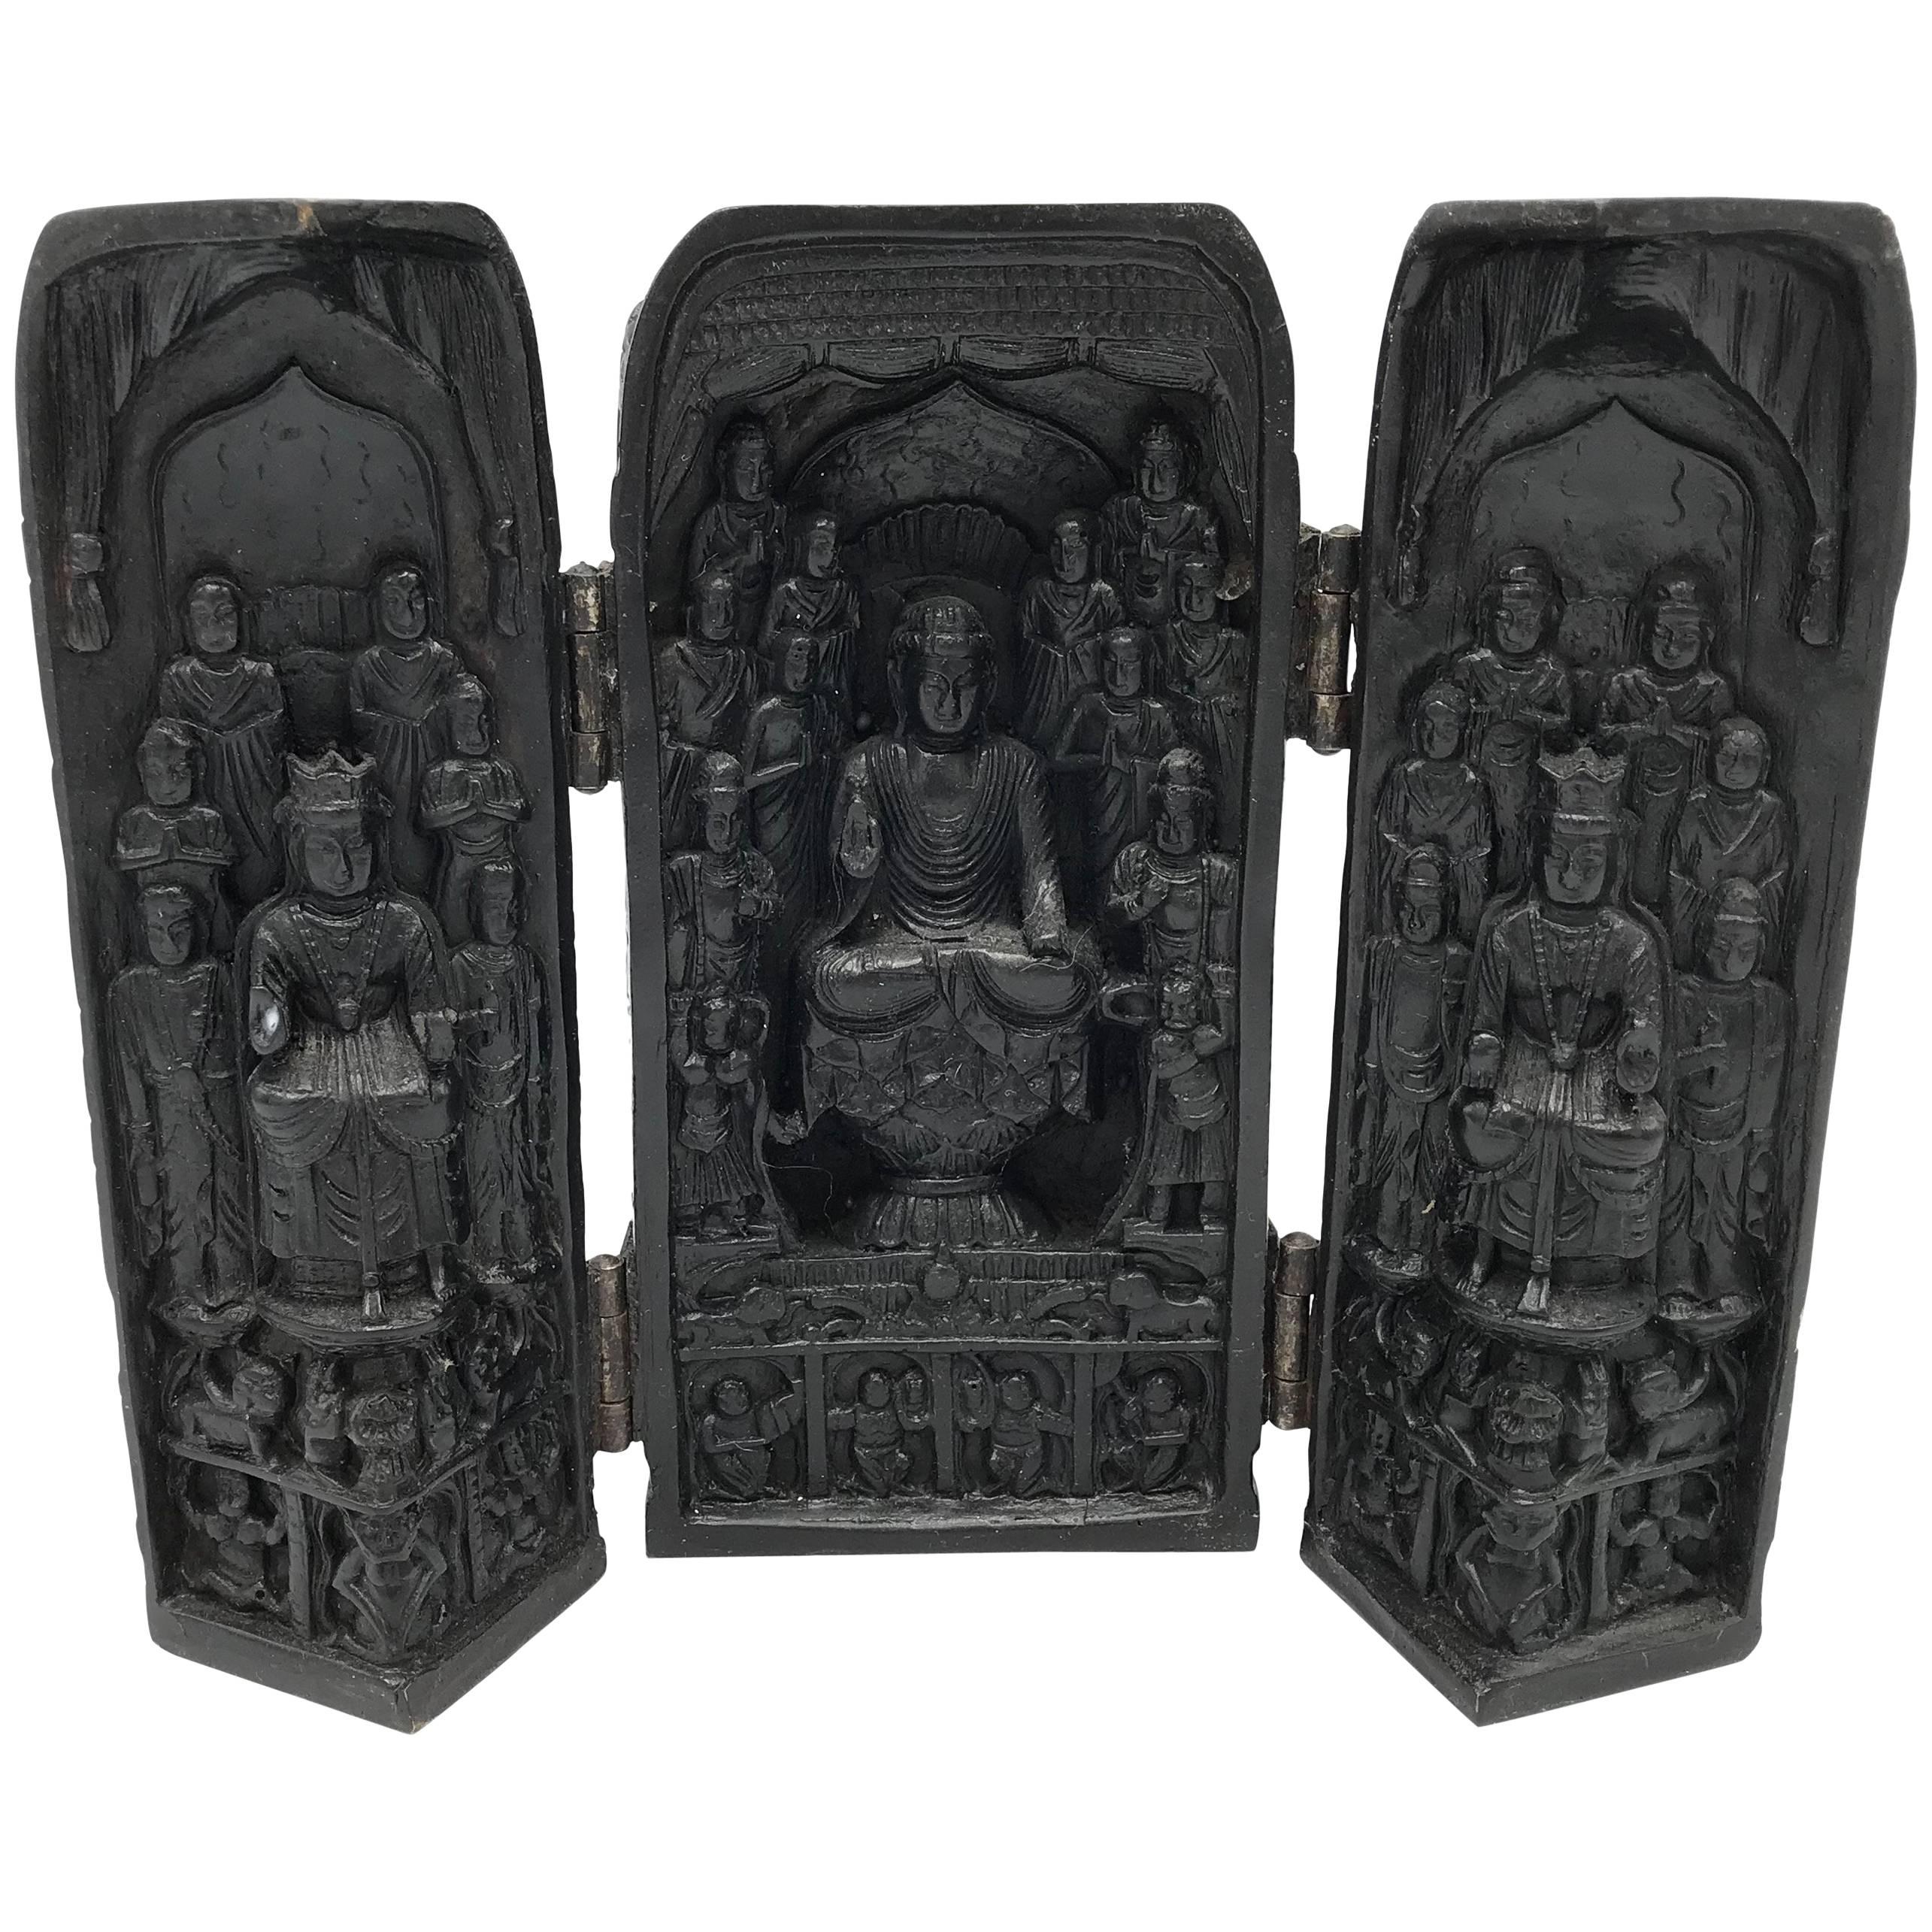 1970s Asian Buddha Temple Reliquary Shrine Trifold Sculpture